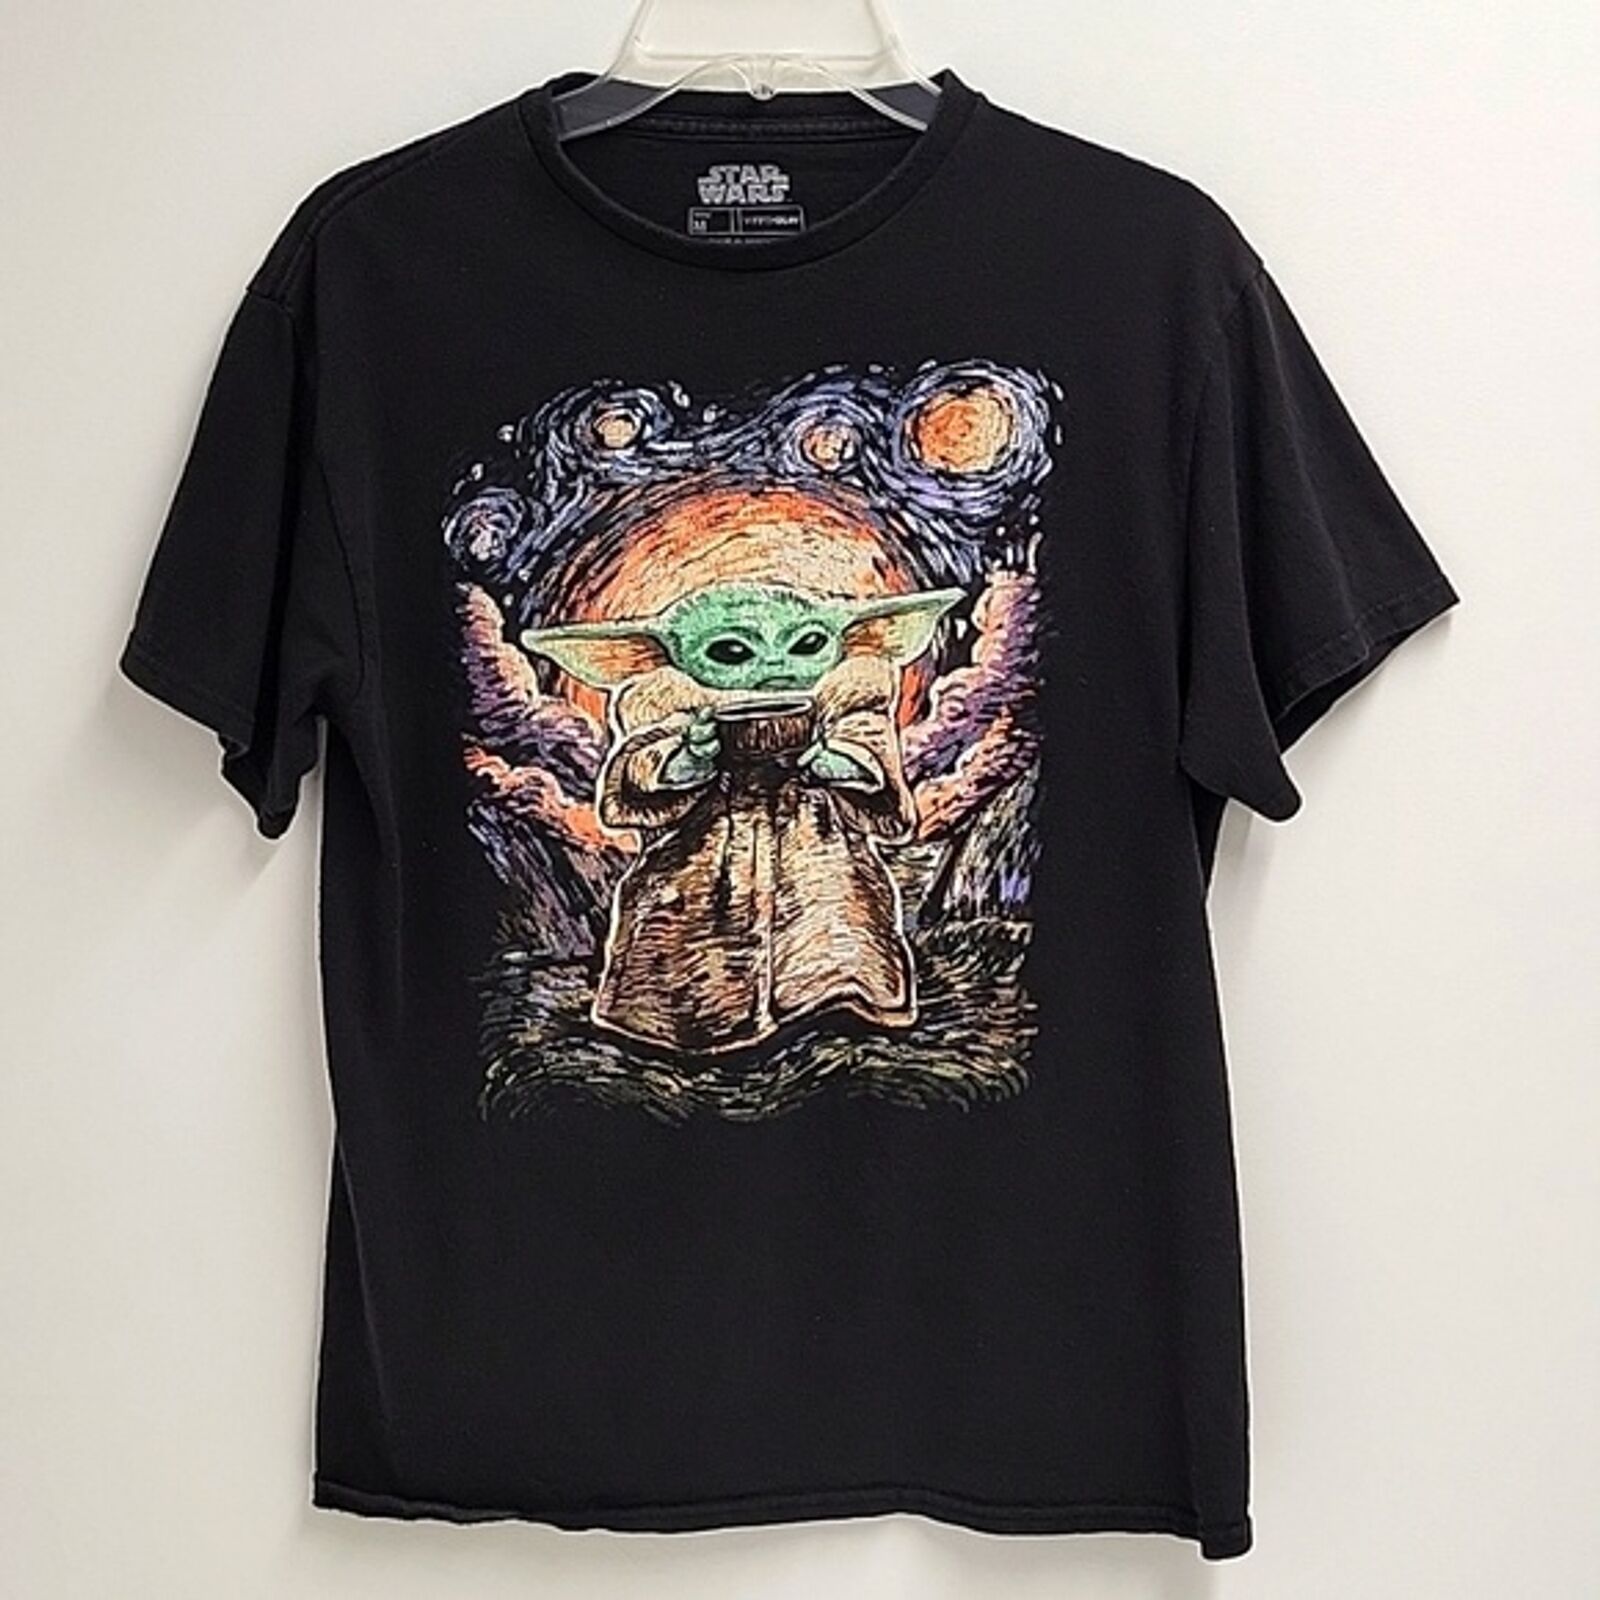 Star Wars Black Yoda T-shirt Size M